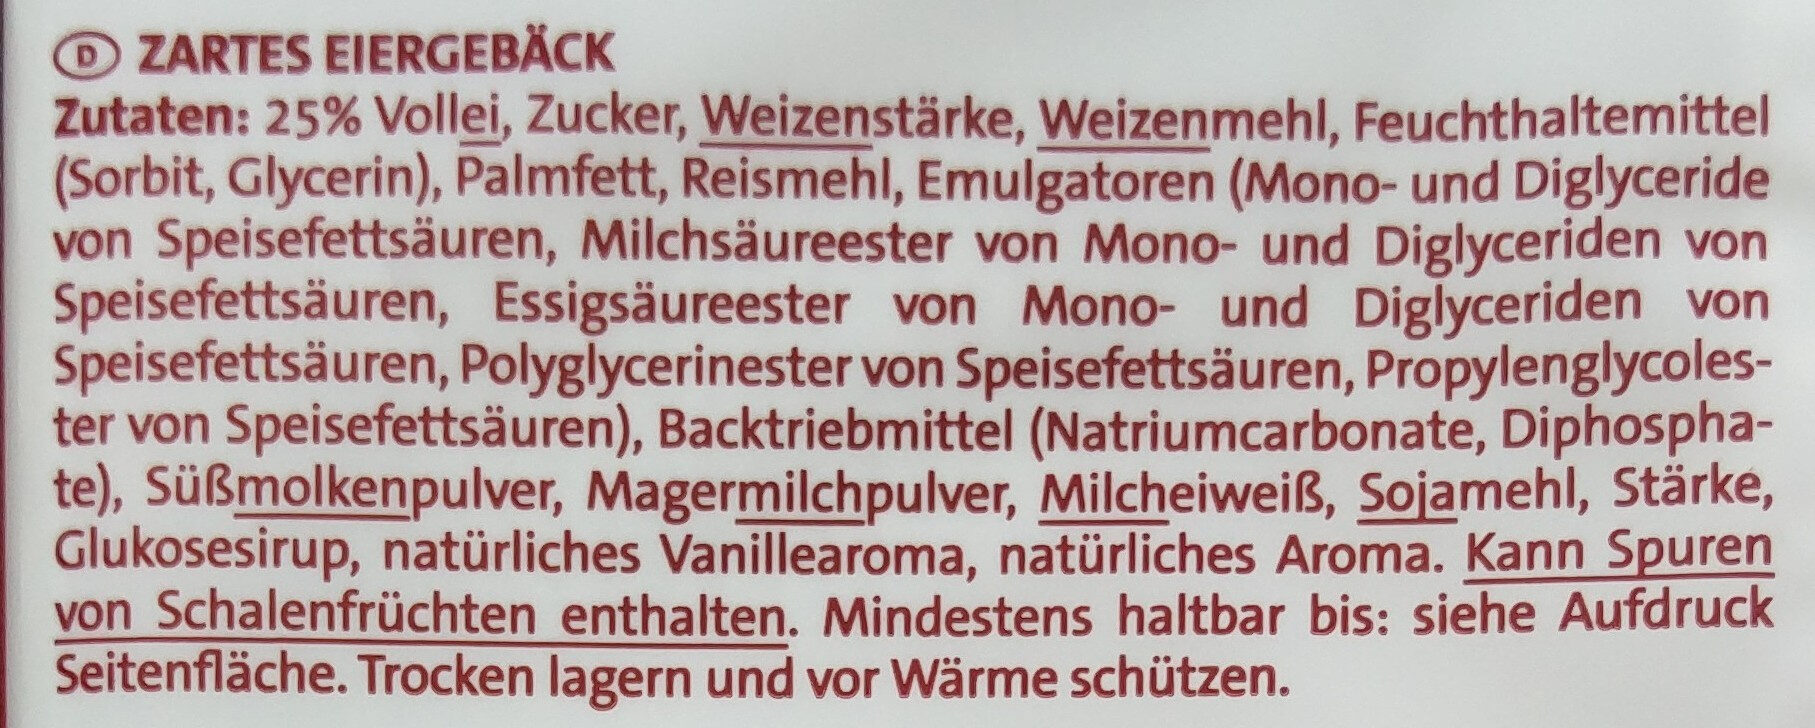 Wiener Torteletts - Zutaten